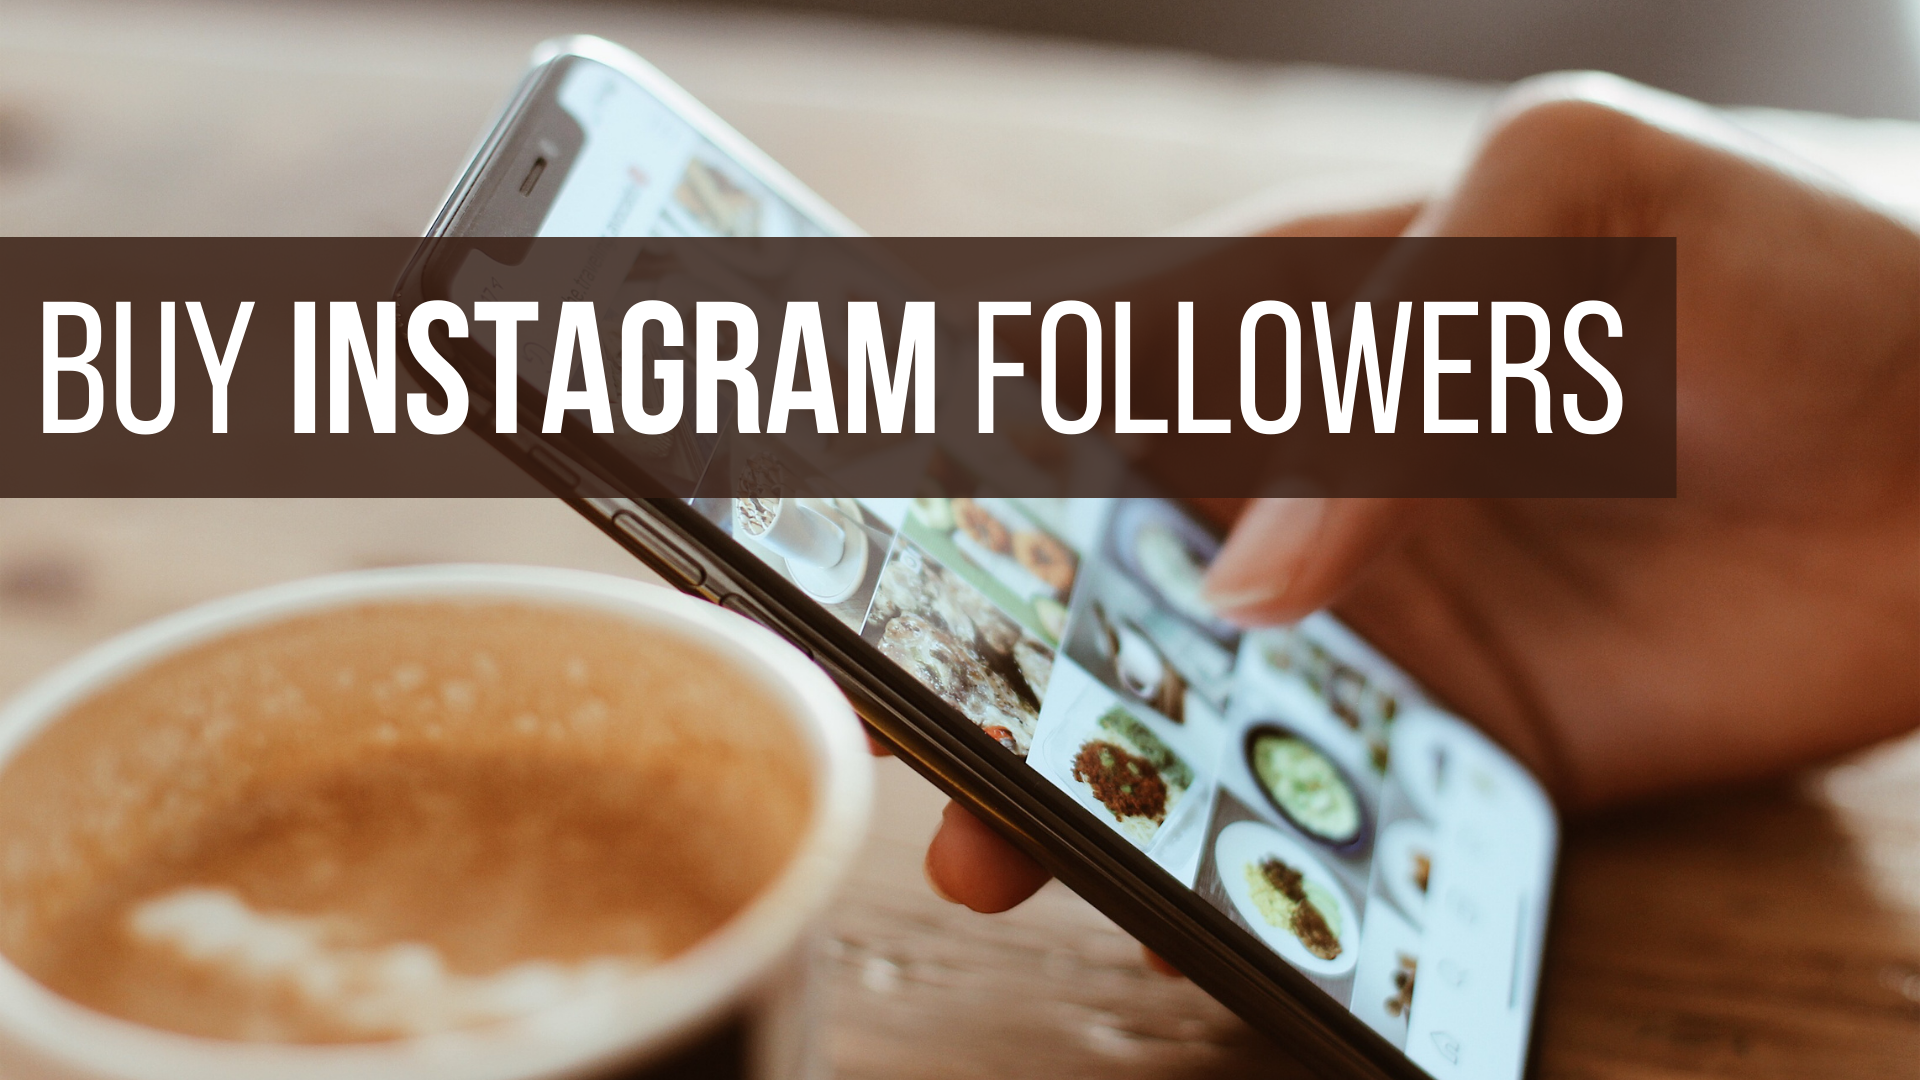 Buy Instagram Followers providers